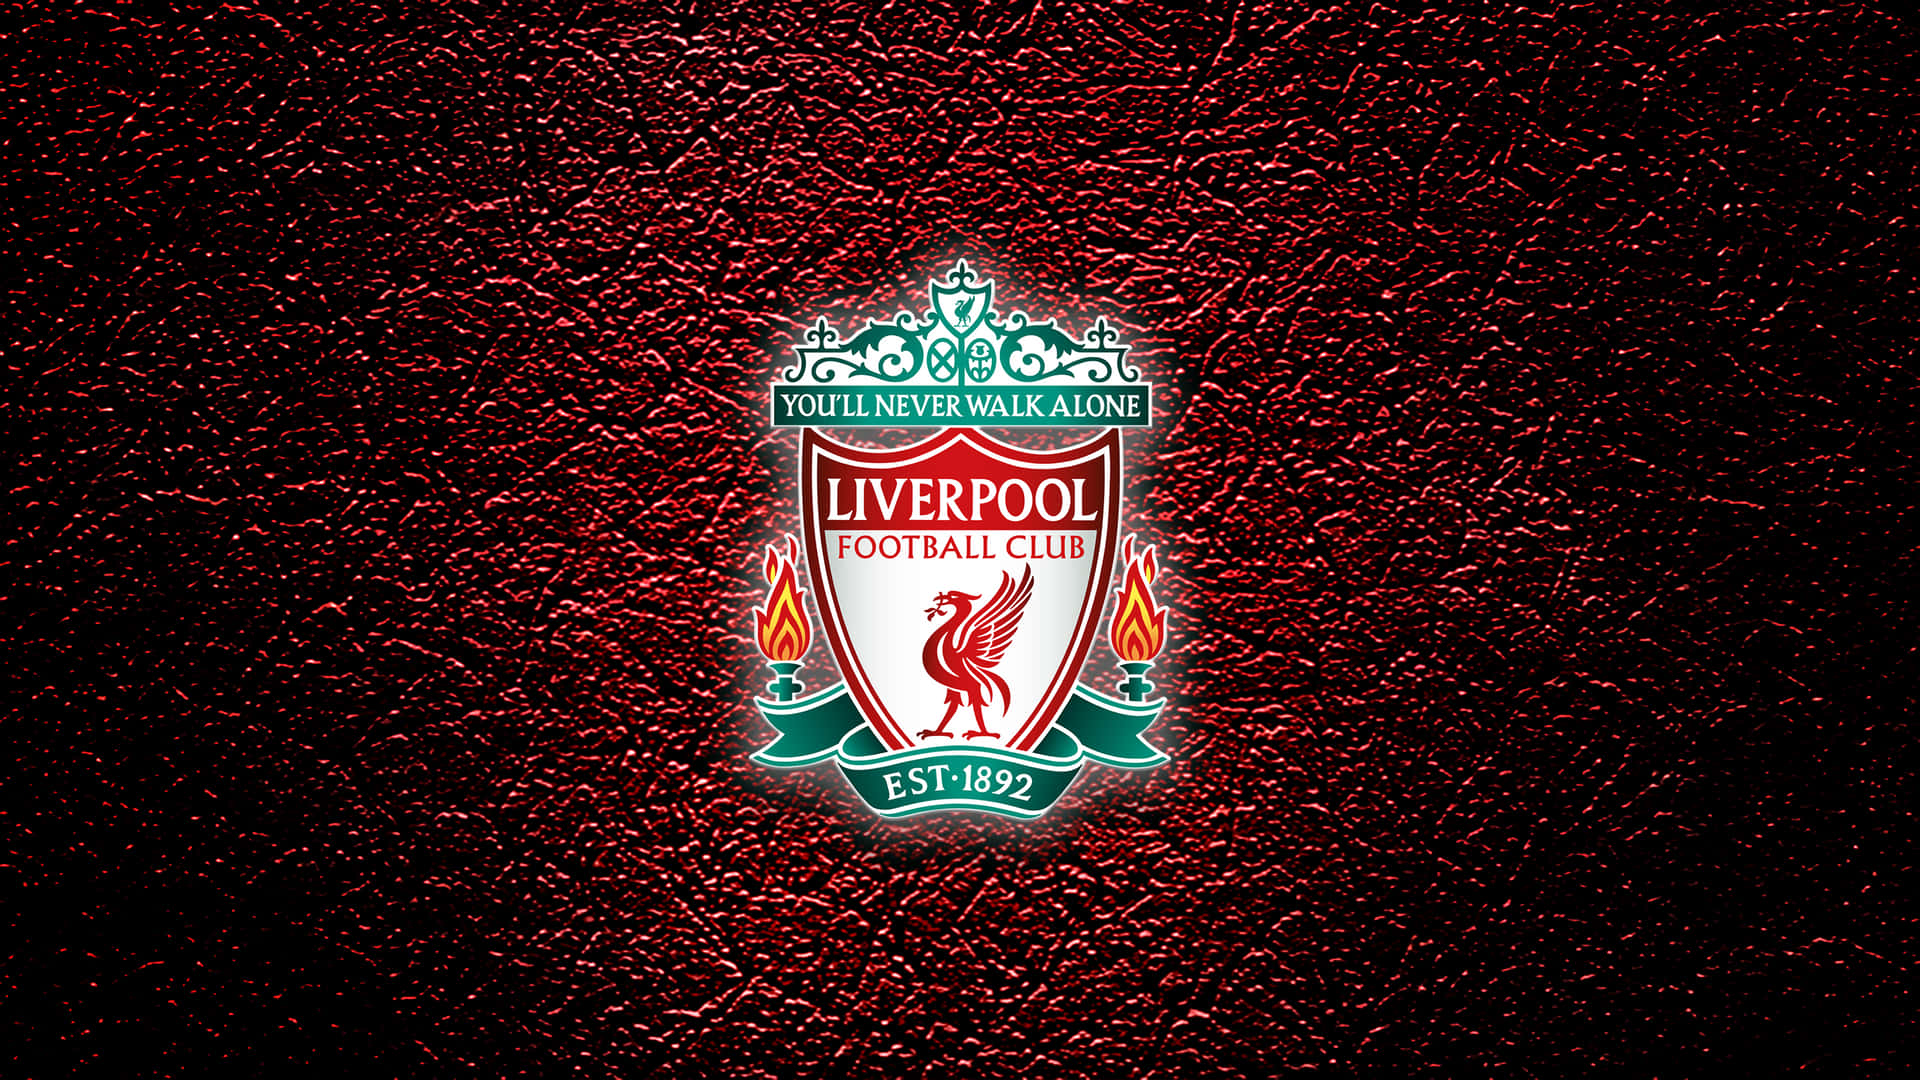 Lad Liverpool FC stige i Ære! Wallpaper